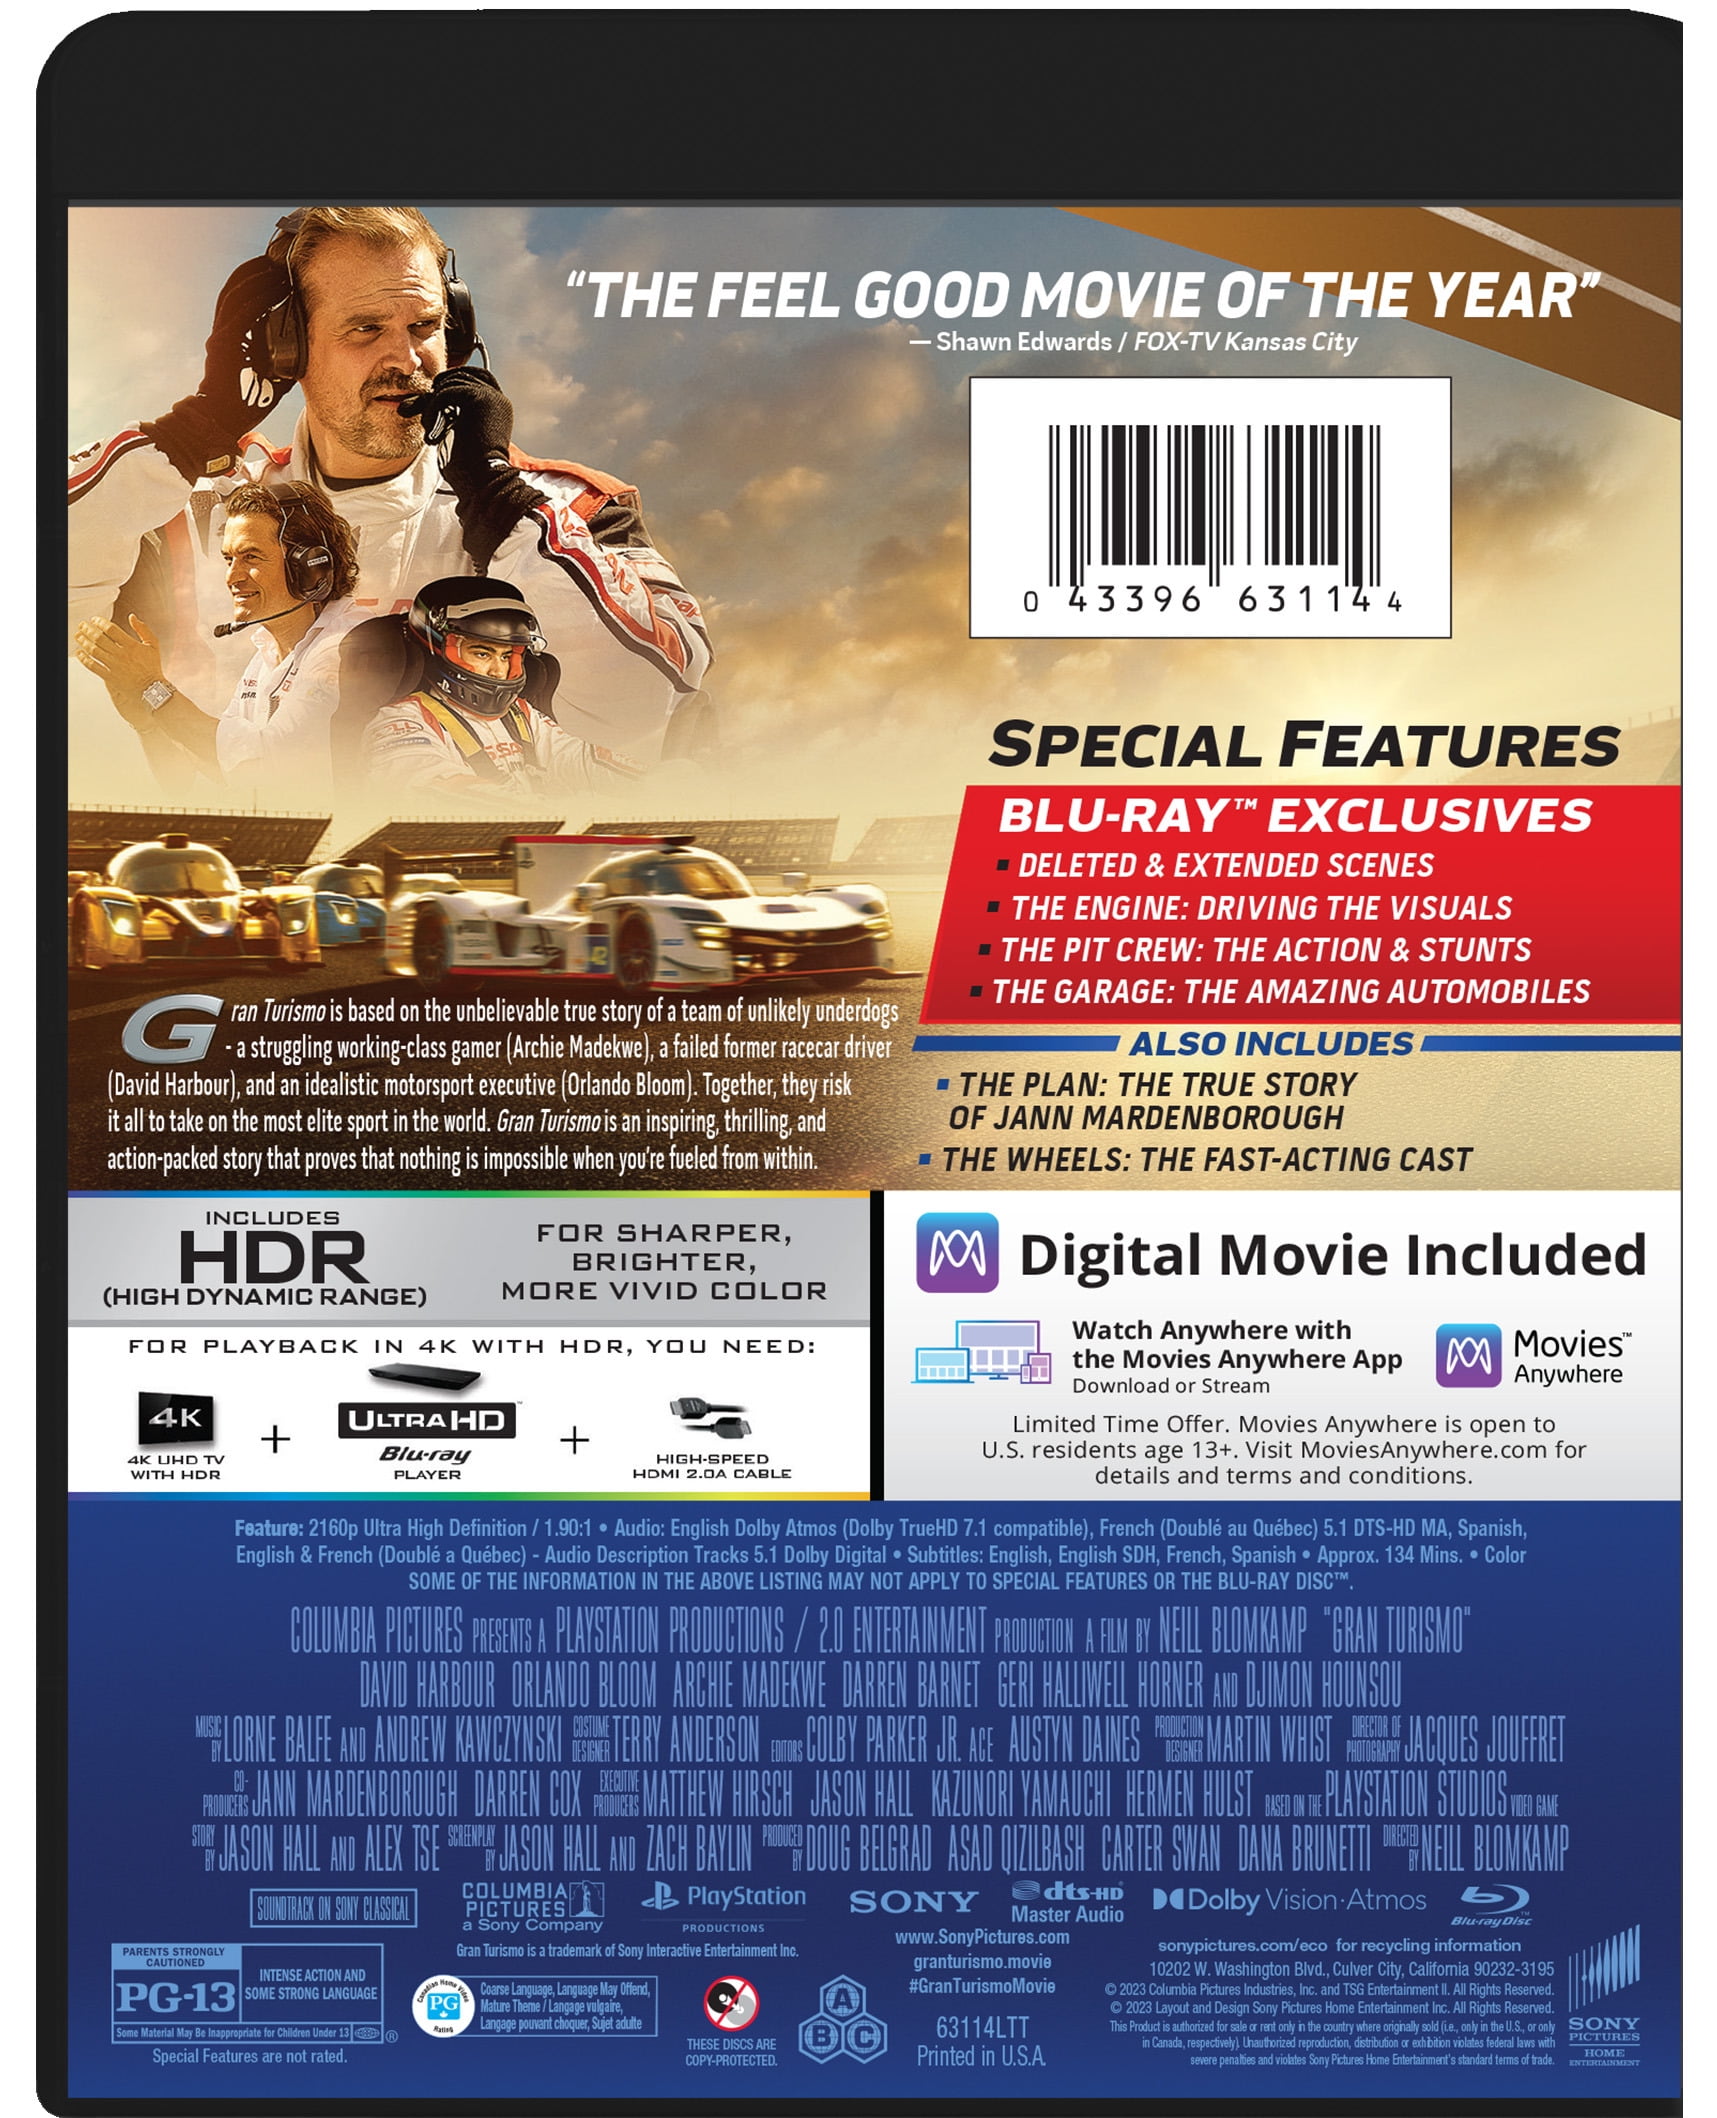 Gran Turismo - Films Action - Aventure DVD - Films DVD & Blu-ray